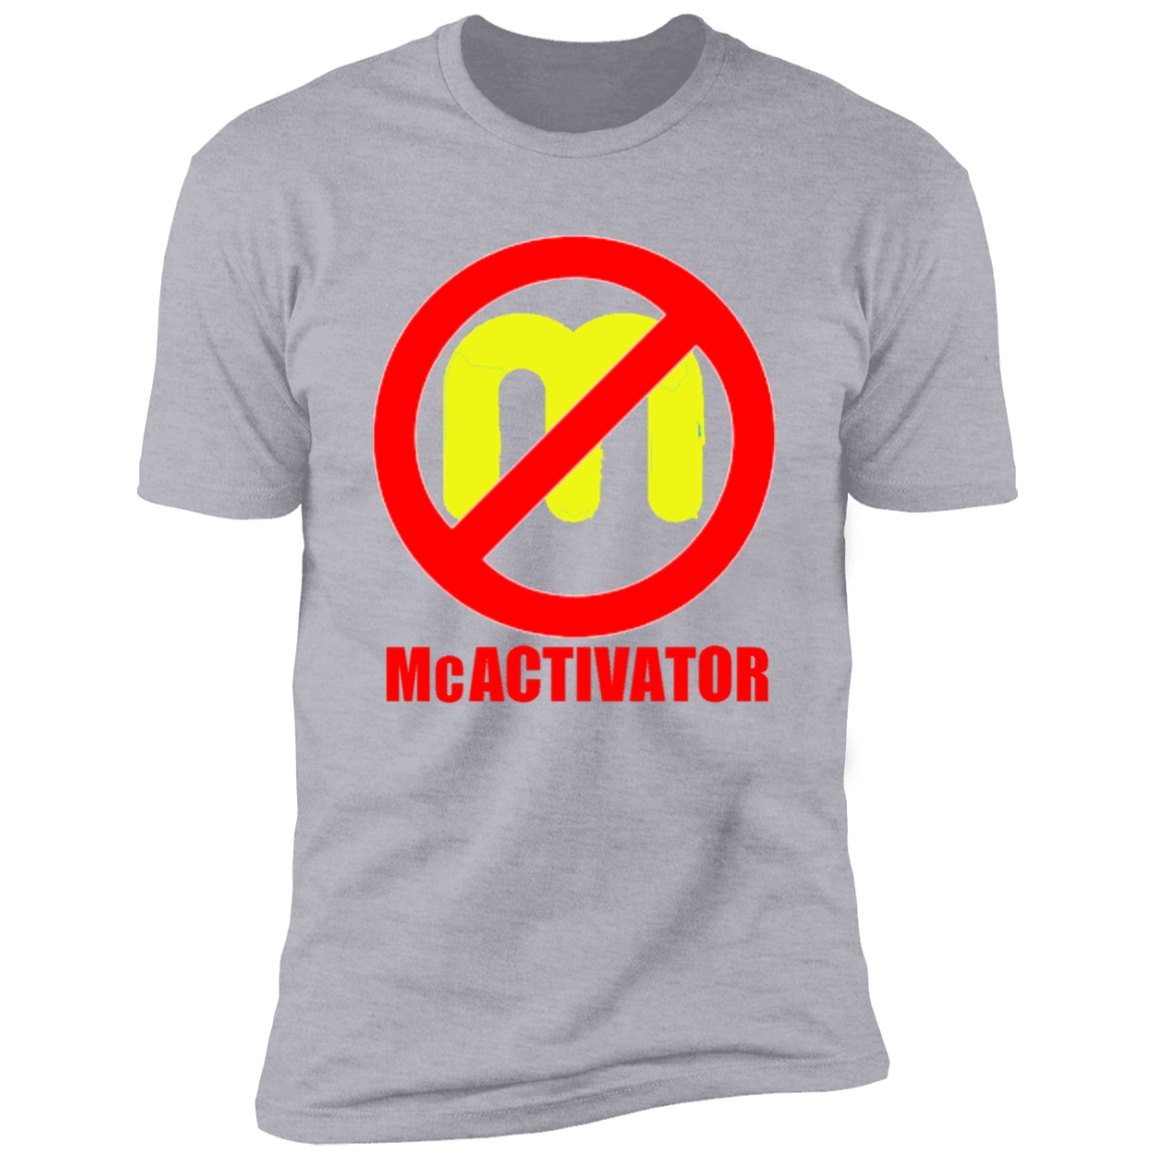 McActivatior Premium Short Sleeve T-Shirt Limited Time